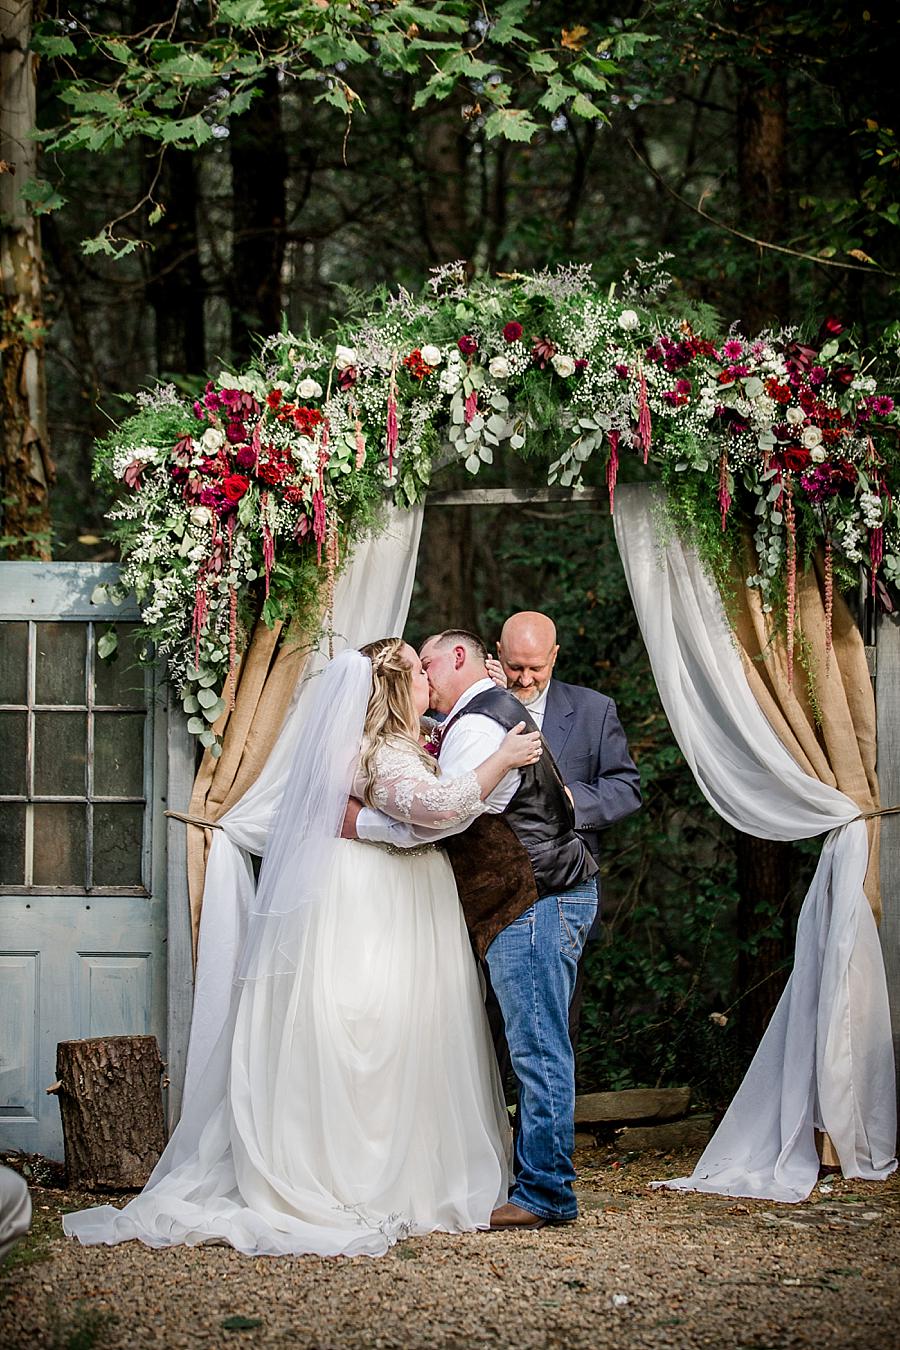 You may kiss the bride at this Sampson's Hollow Fall Wedding by Knoxville Wedding Photographer, Amanda May Photos.